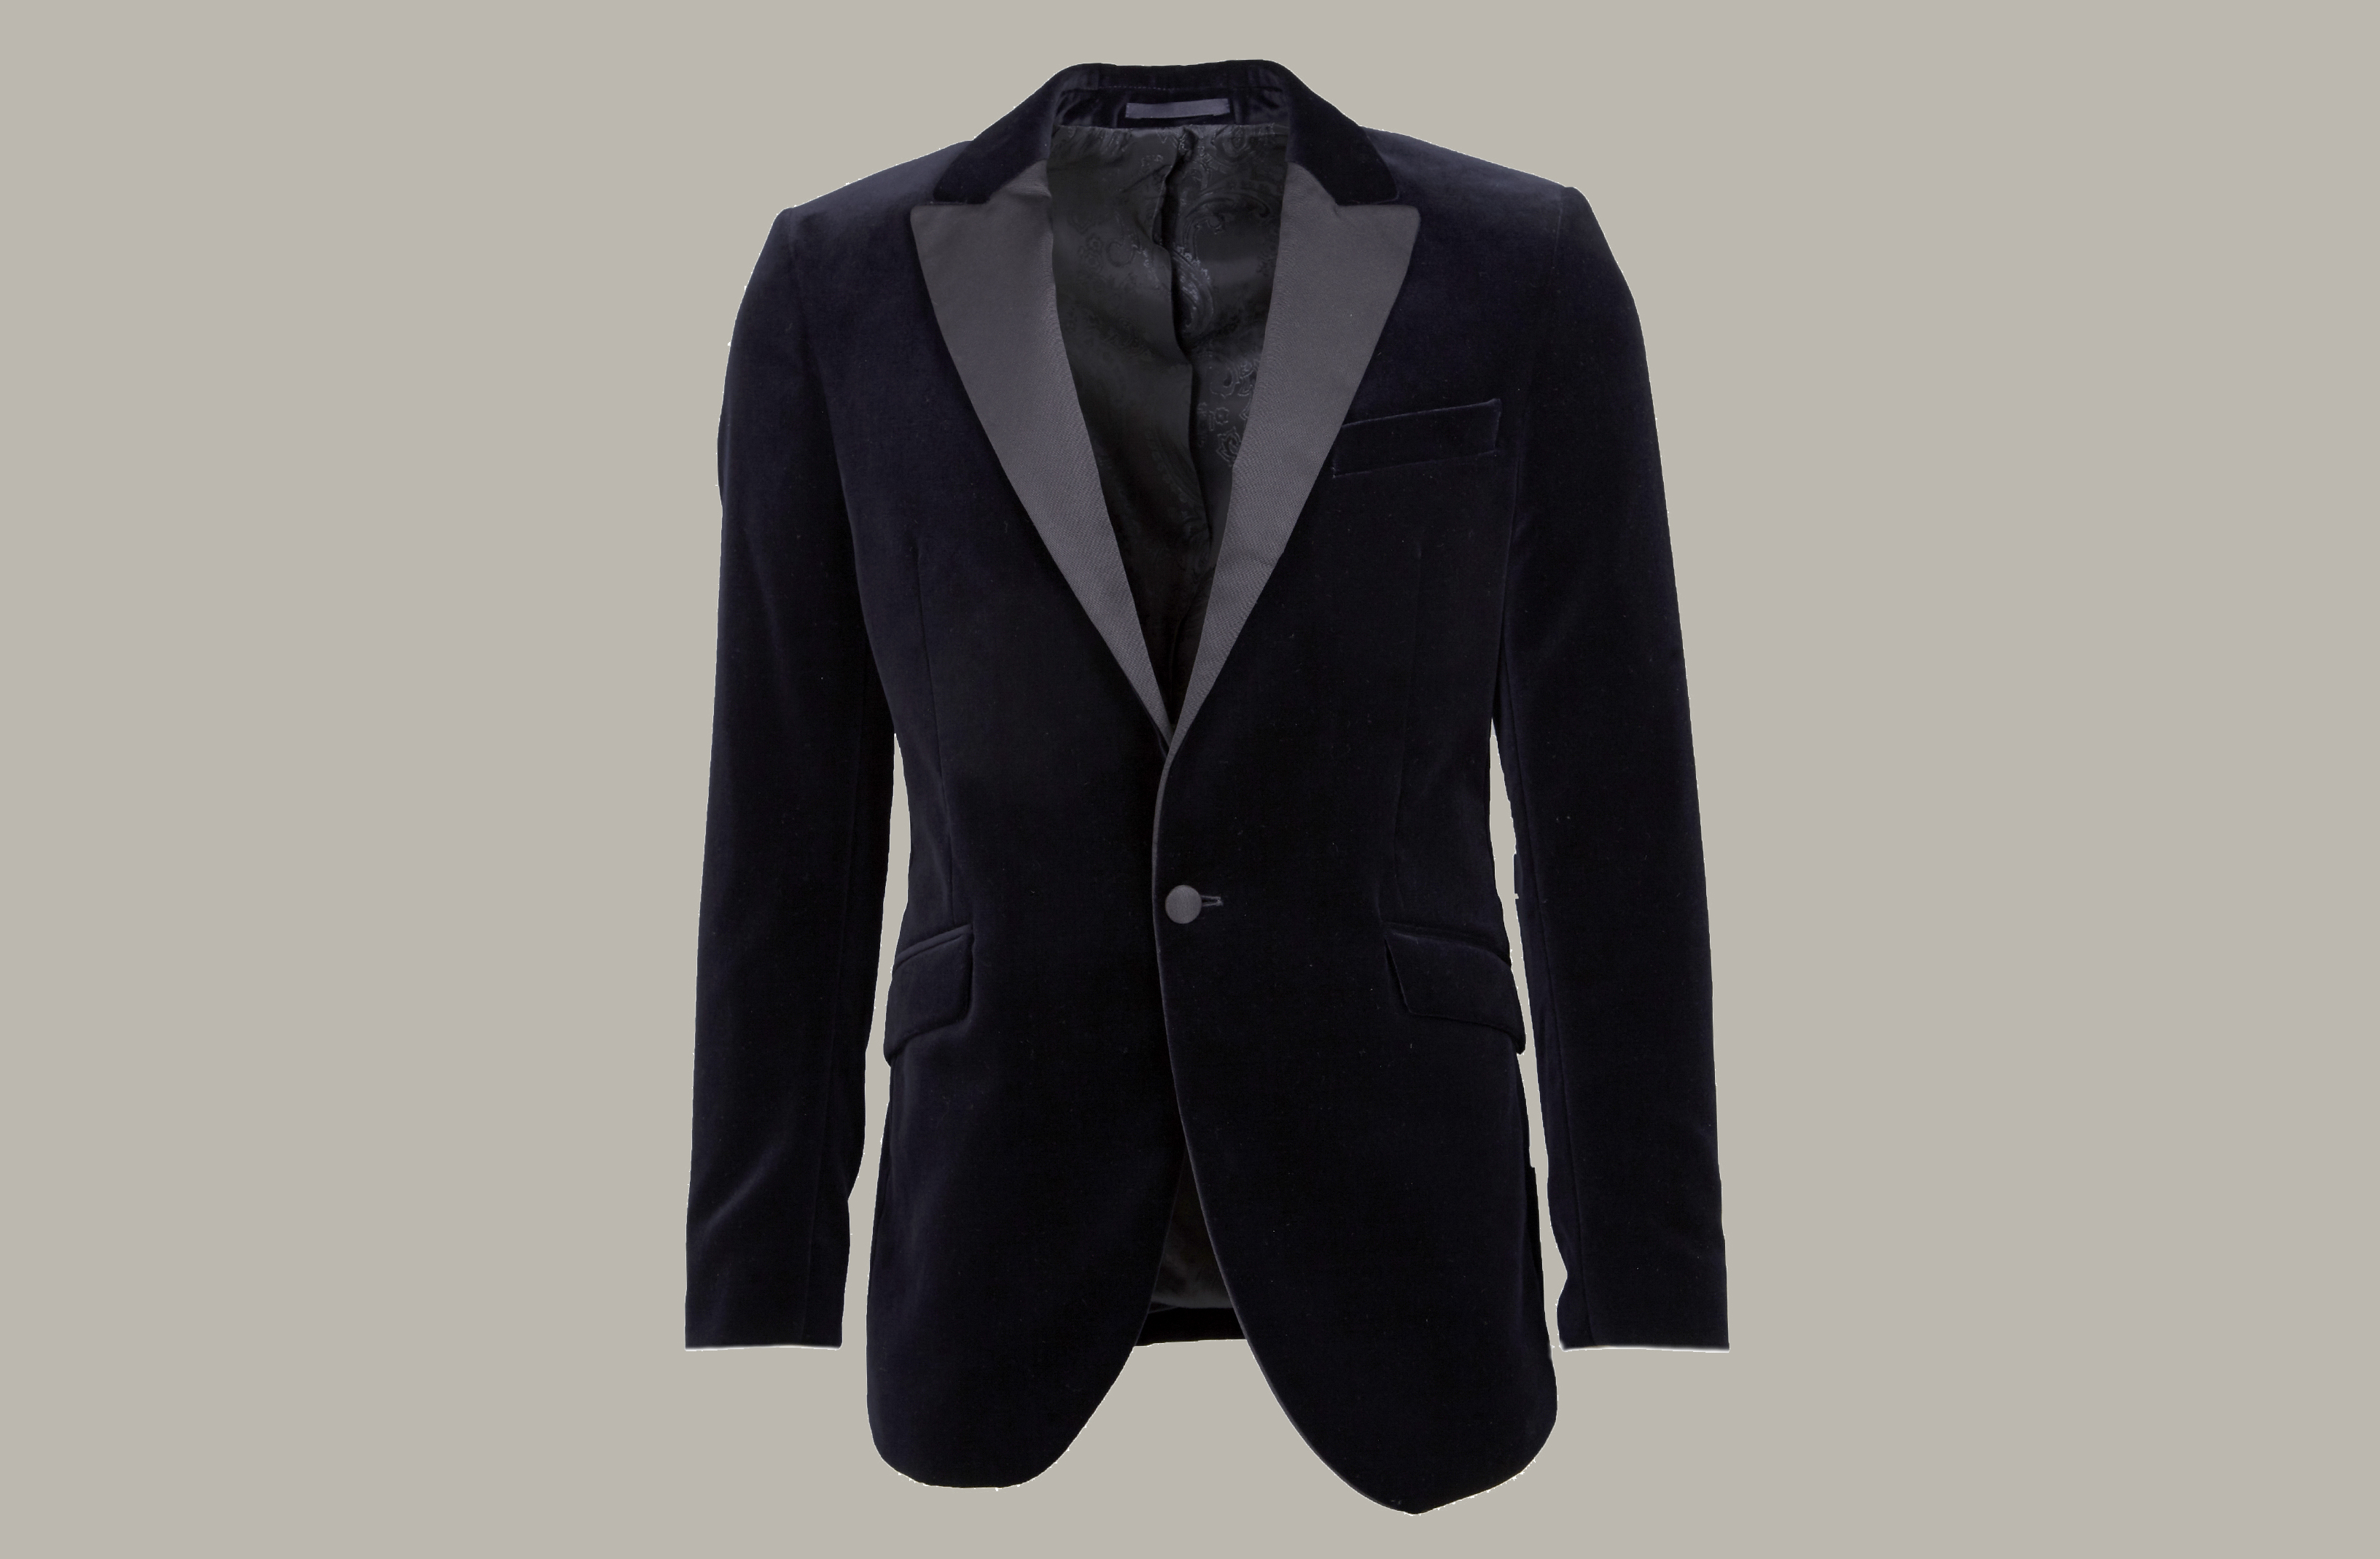 Favourbrook's velvet dinner jacket has contrasting black silk grosgrain peak lapels, matching buttons. and an elegant midnight paisley lining